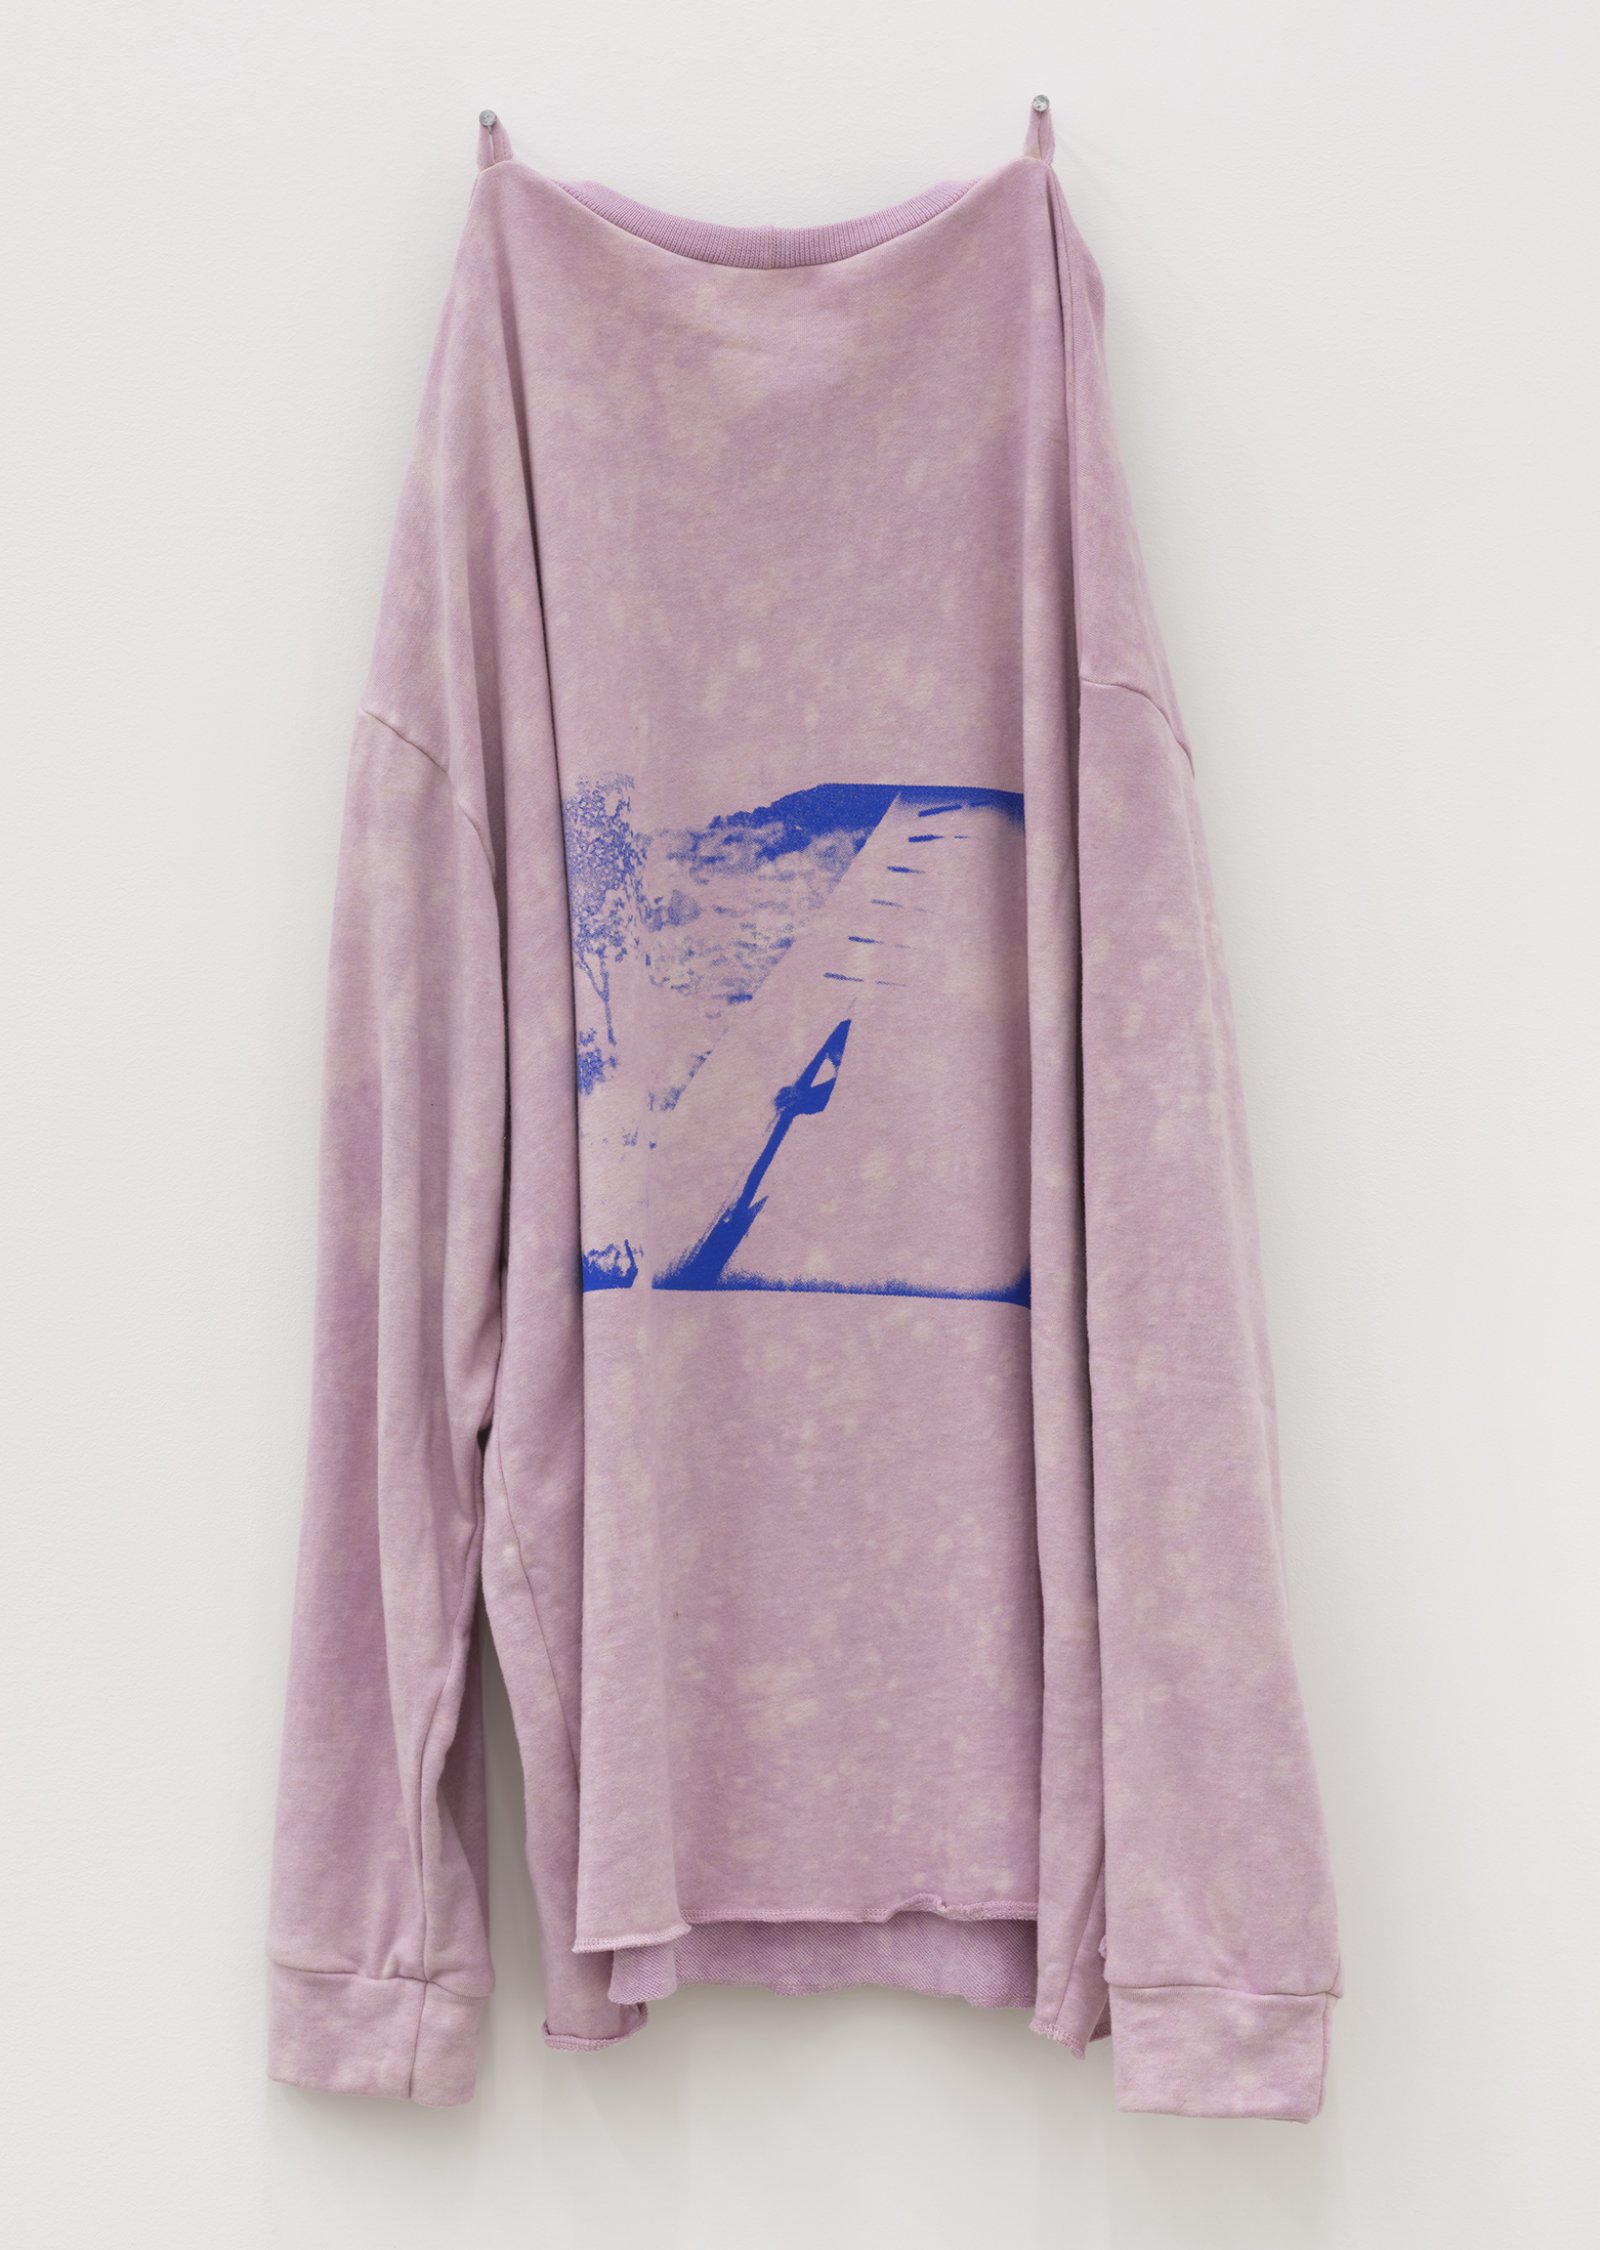 Duane Linklater, whiteeagle, 2020, handmade sweater, cochineal dye, silkscreen, nails, 38 x 20 x 5 in. (97 x 51 x 13 cm) by Duane Linklater